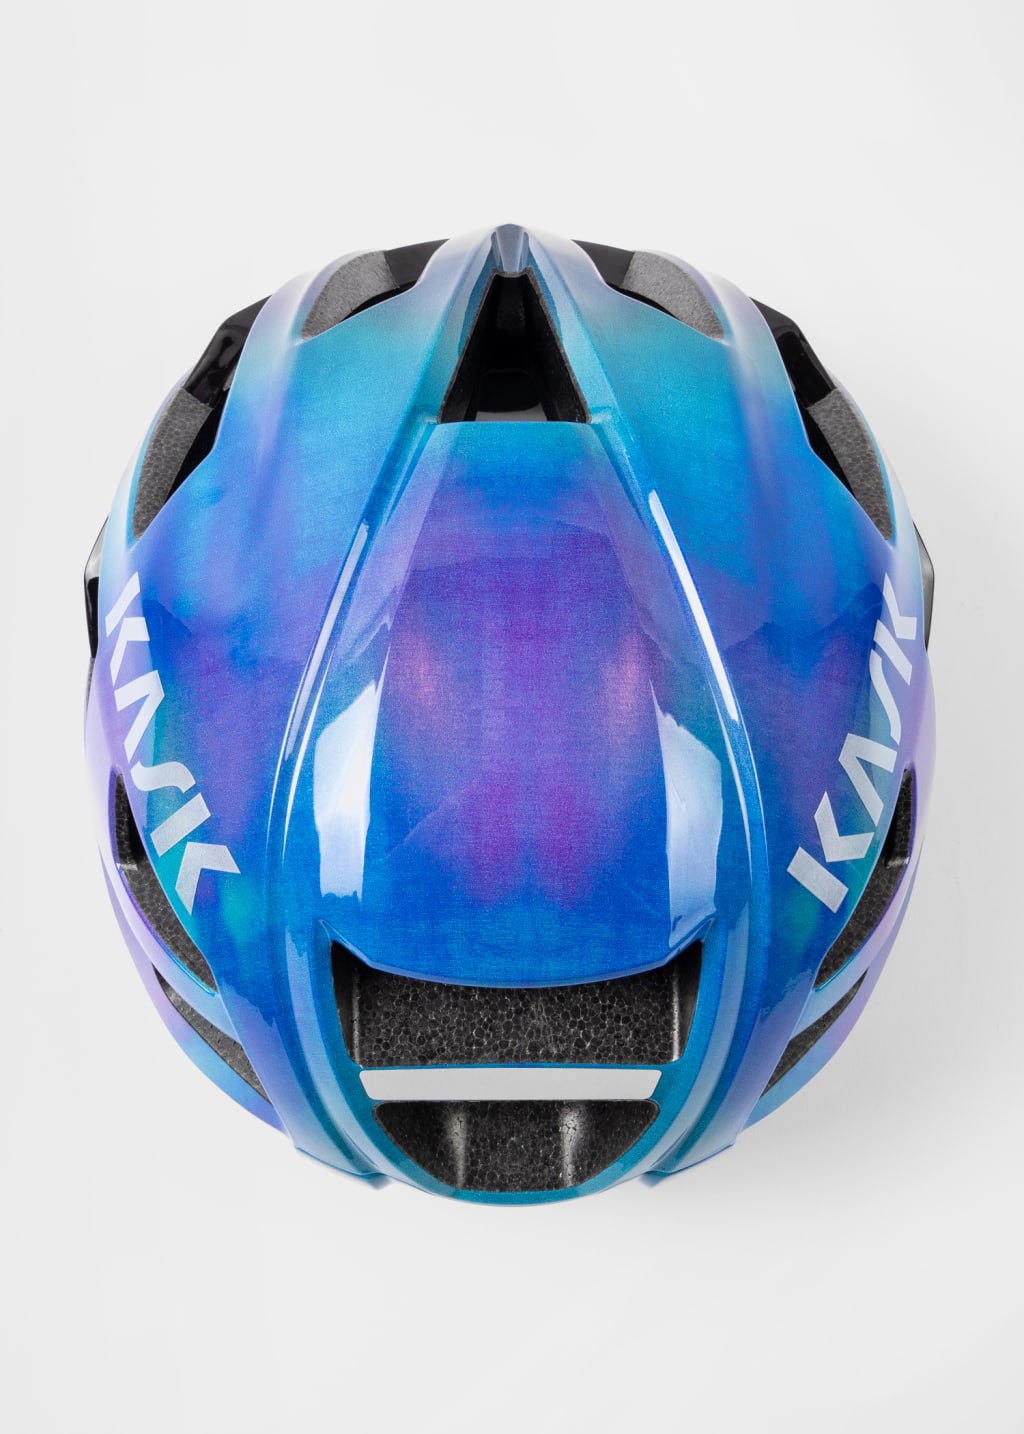 Paul Smith + Kask 'Blue Gradient' Protone Cycling Helmet